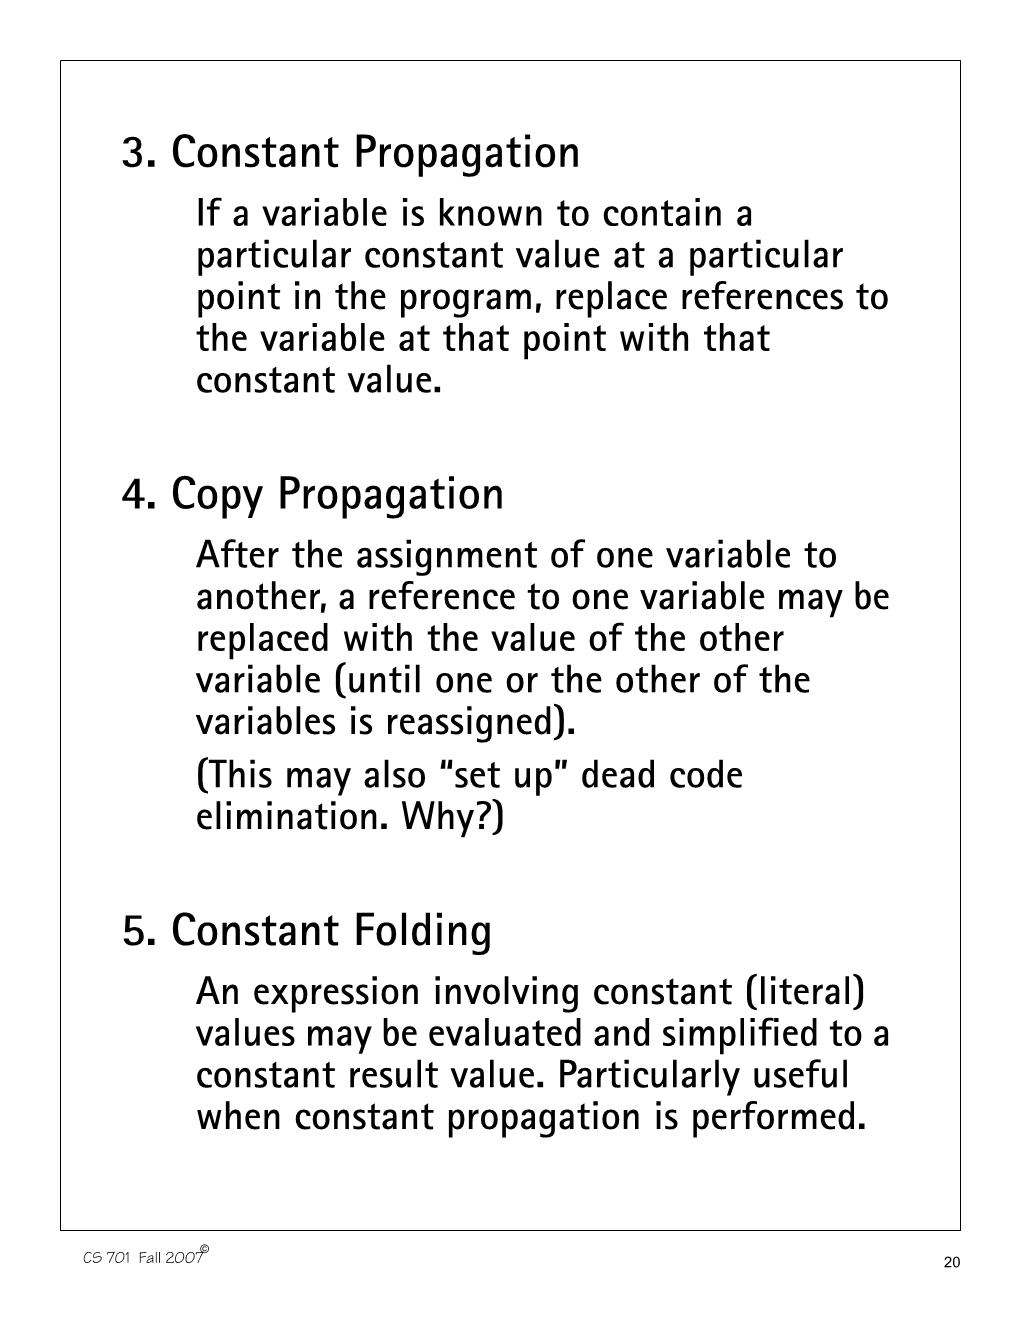 3. Constant Propagation 4. Copy Propagation 5. Constant Folding